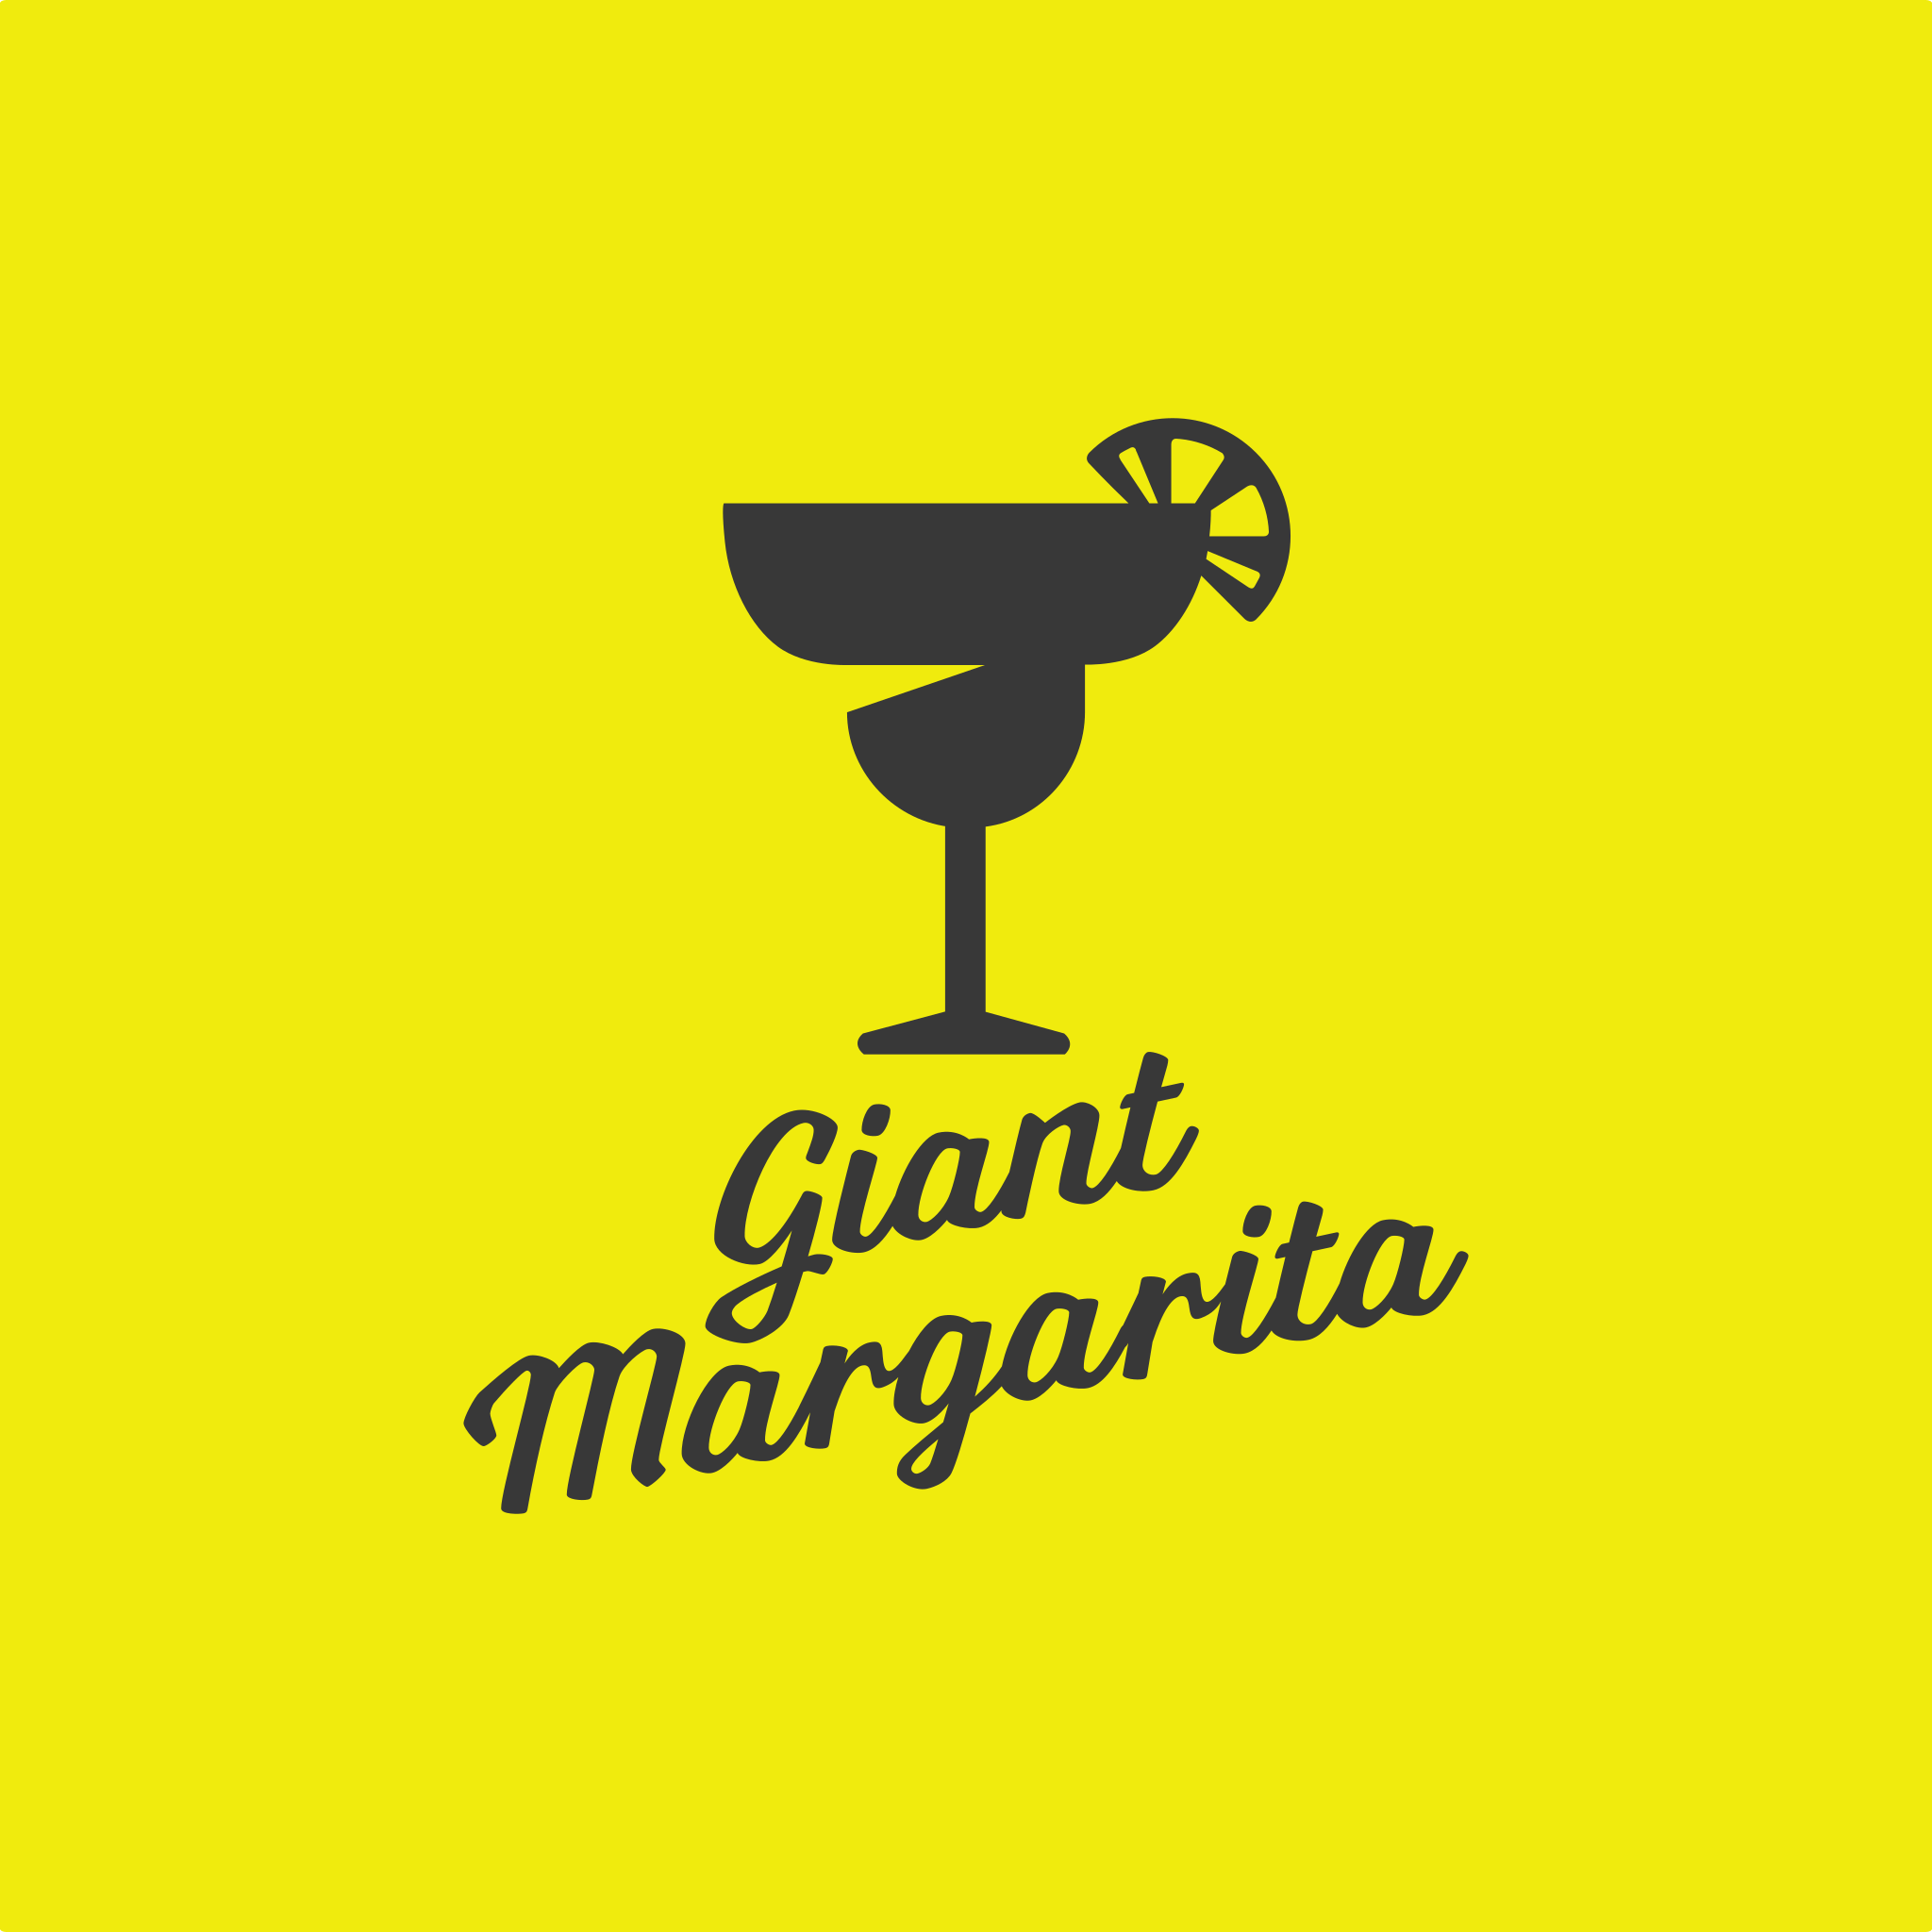 Margarita Logo - File:Giant Margarita Logo.png - Wikimedia Commons